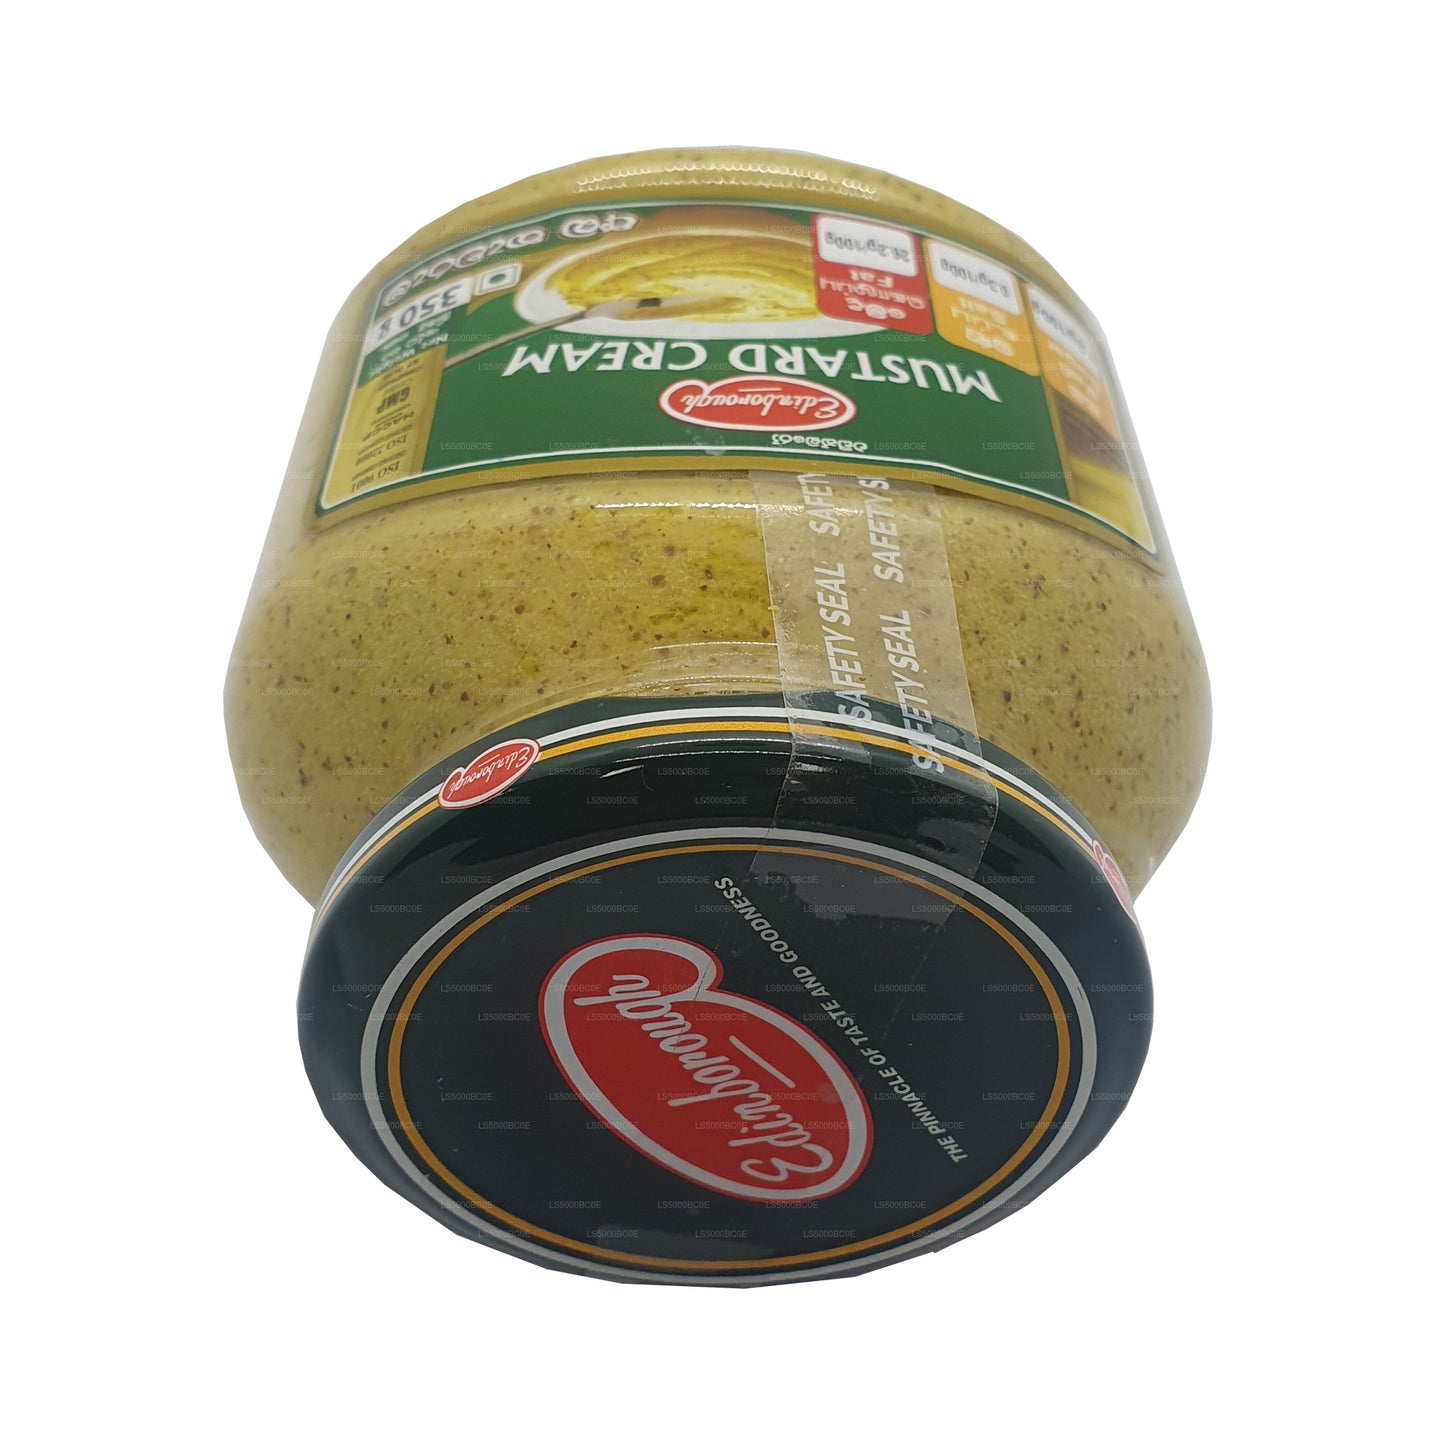 Edinhorough Mustard Cream (350g)